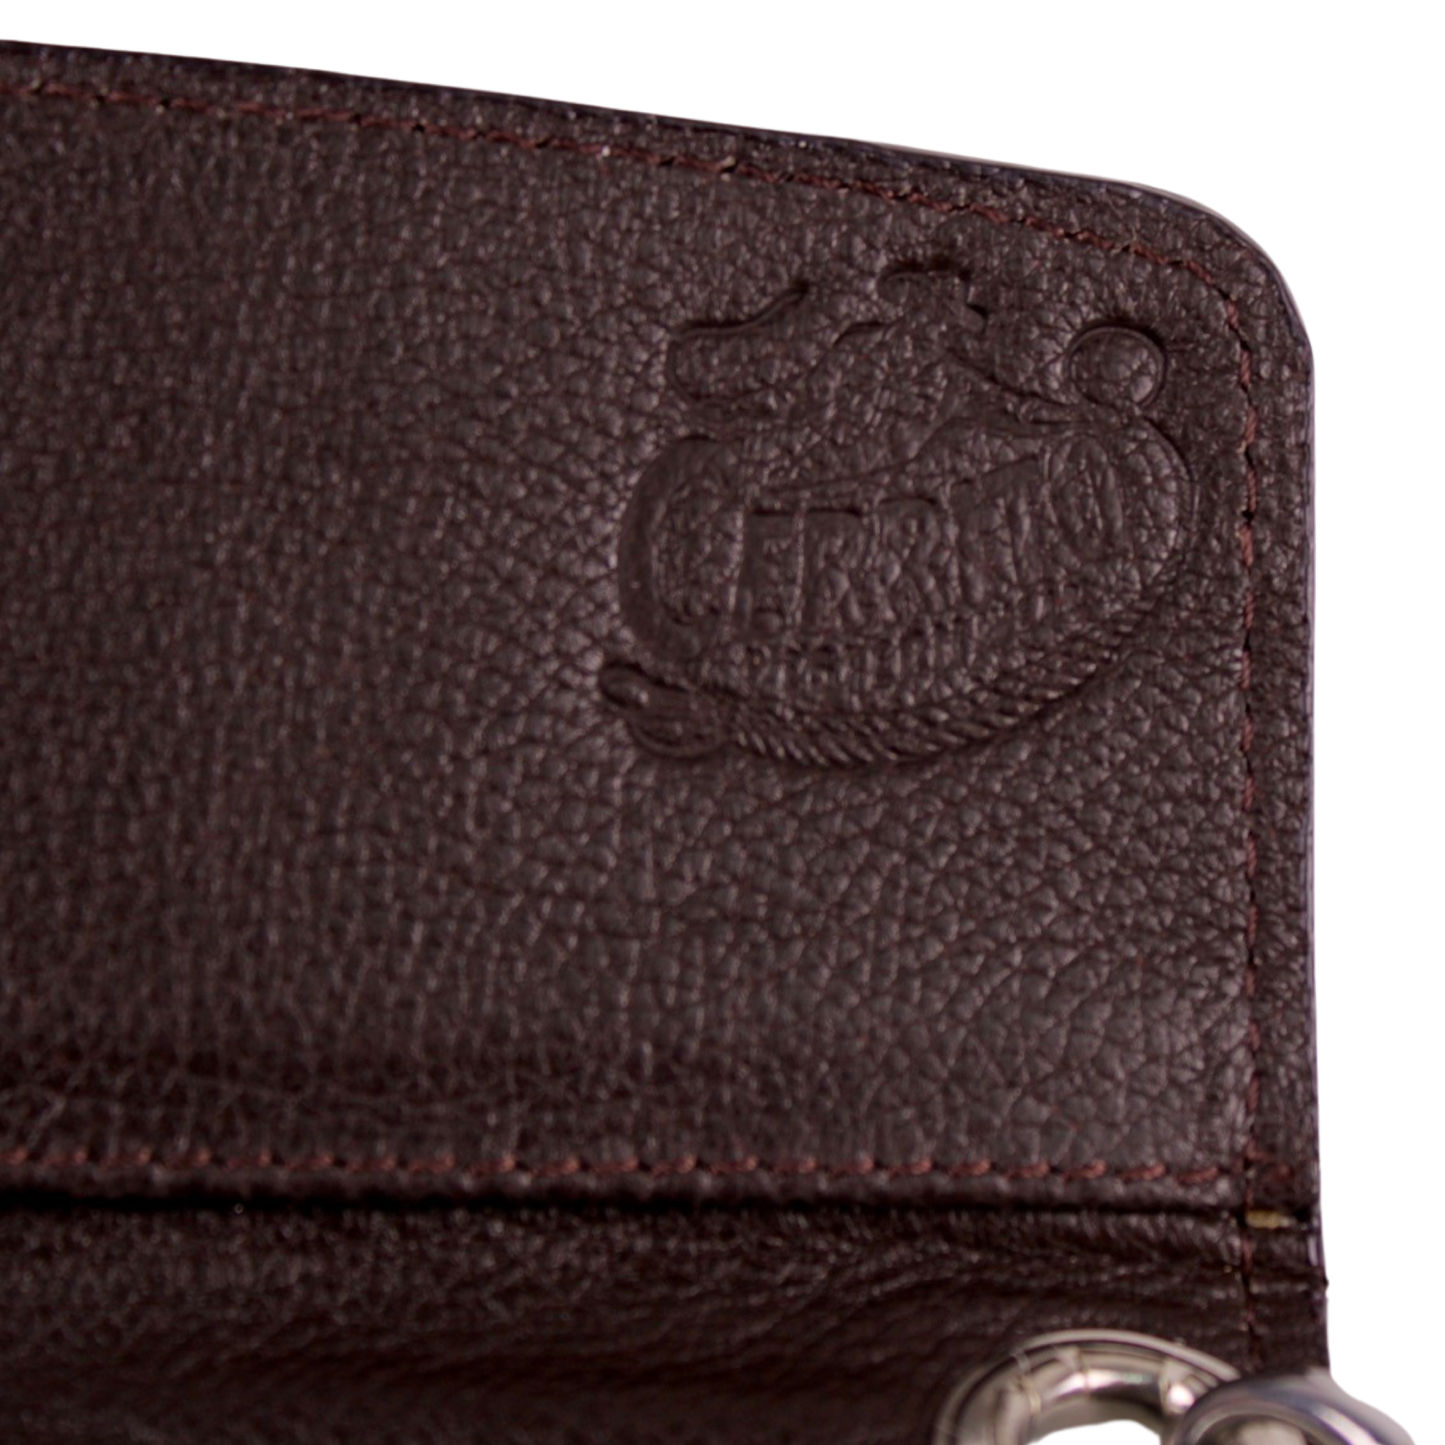 Cerrito Cowhide Leather Strap Wallet